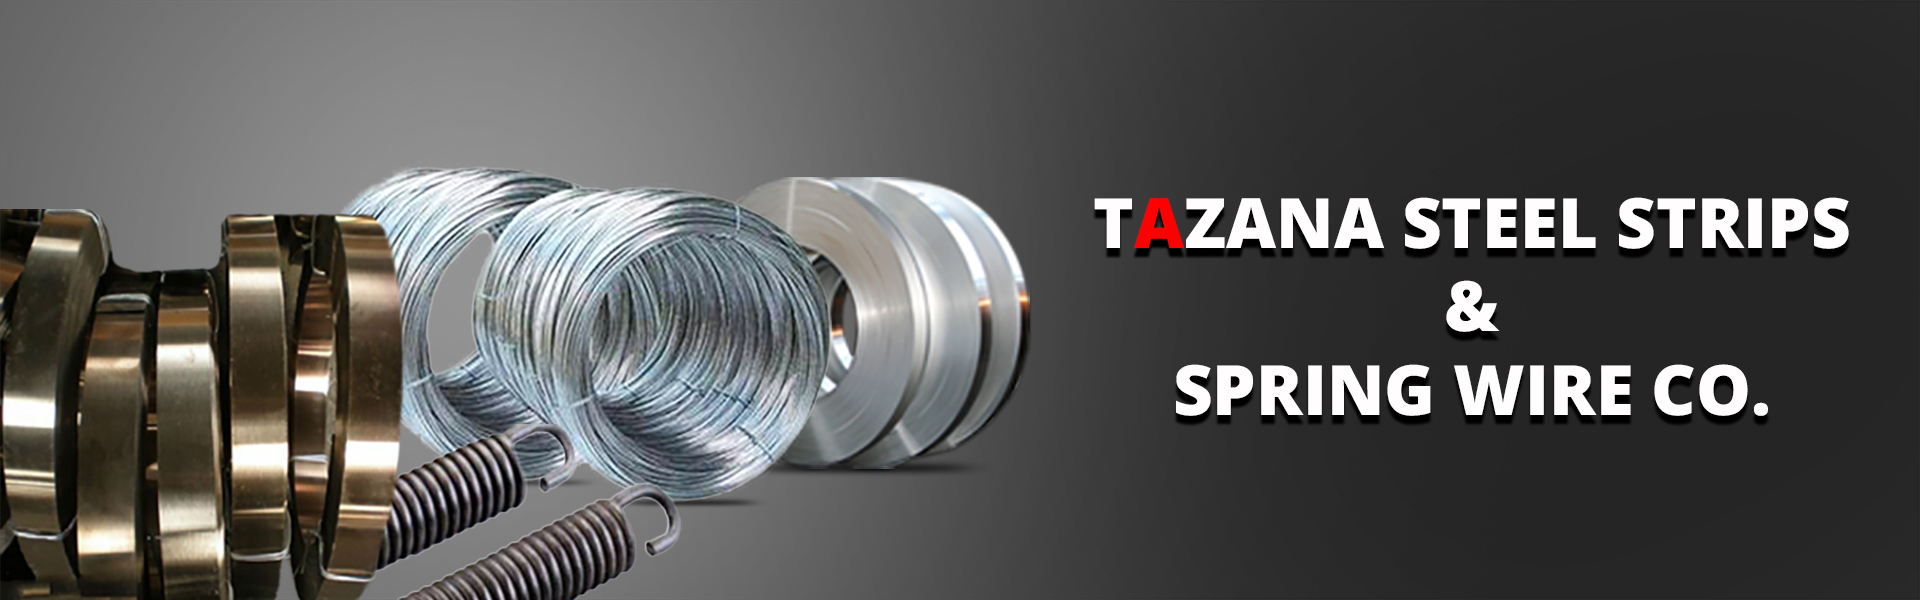 Tazana Steel Strips & Spring Wire Co